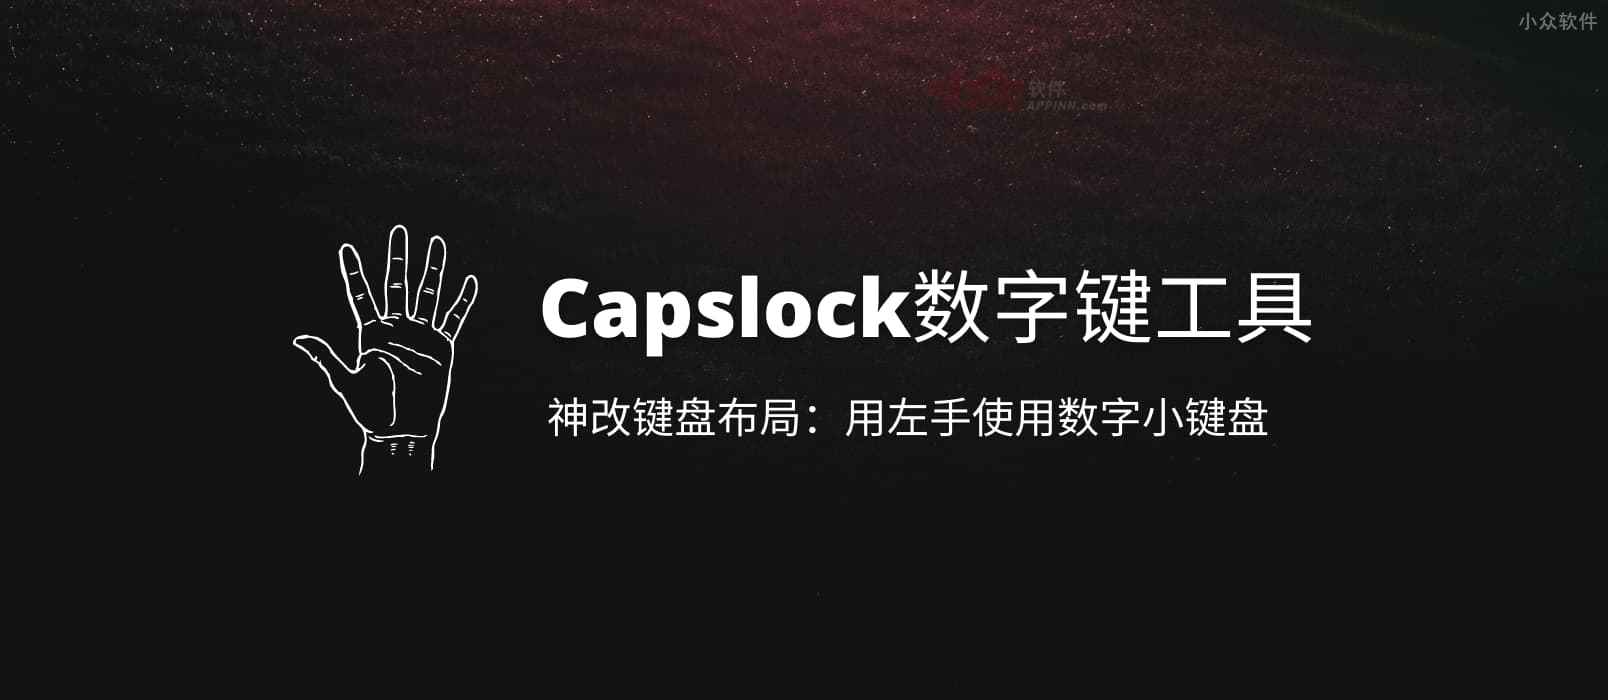 Capslock数字键工具 - 用 AHK 神改键盘布局：用左手使用数字小键盘